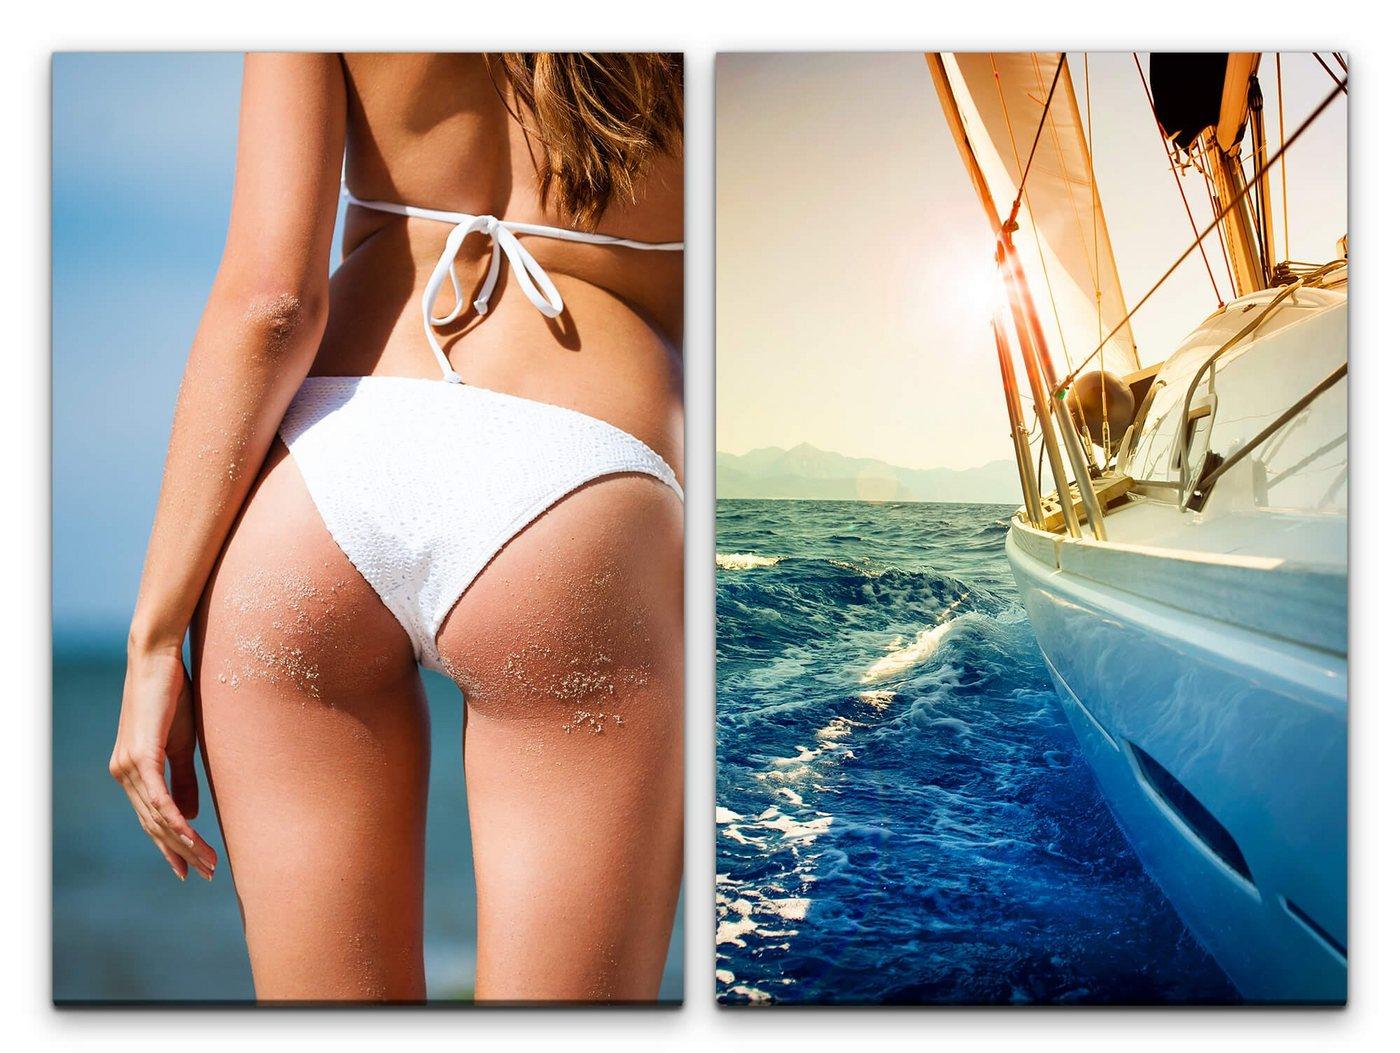 Sinus Art Leinwandbild 2 Bilder je 60x90cm Bikini Yacht Segeln Mittelmeer Sommer Urlaub Sexy